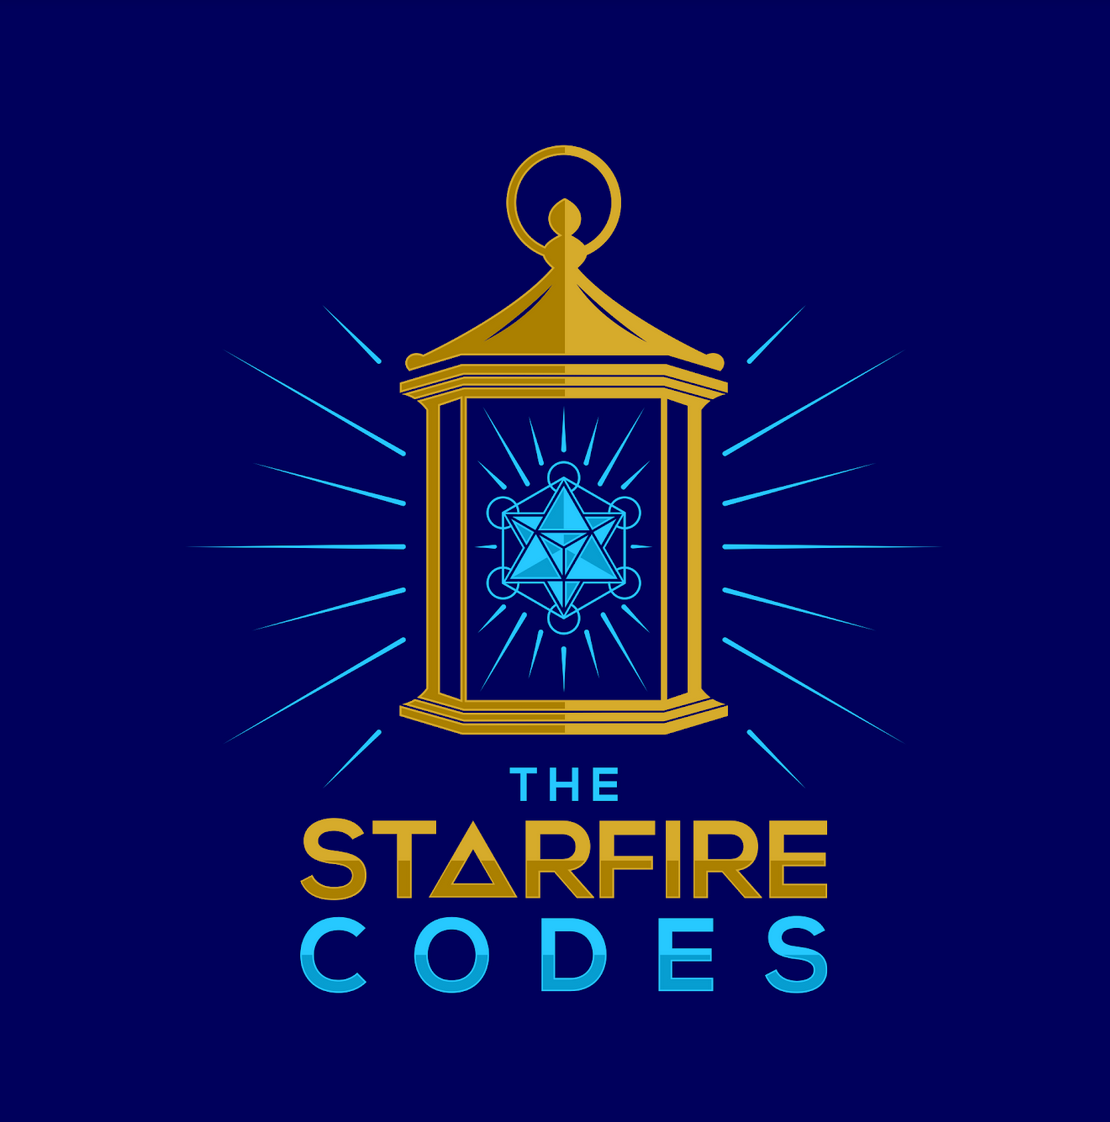 The Starfire Codes